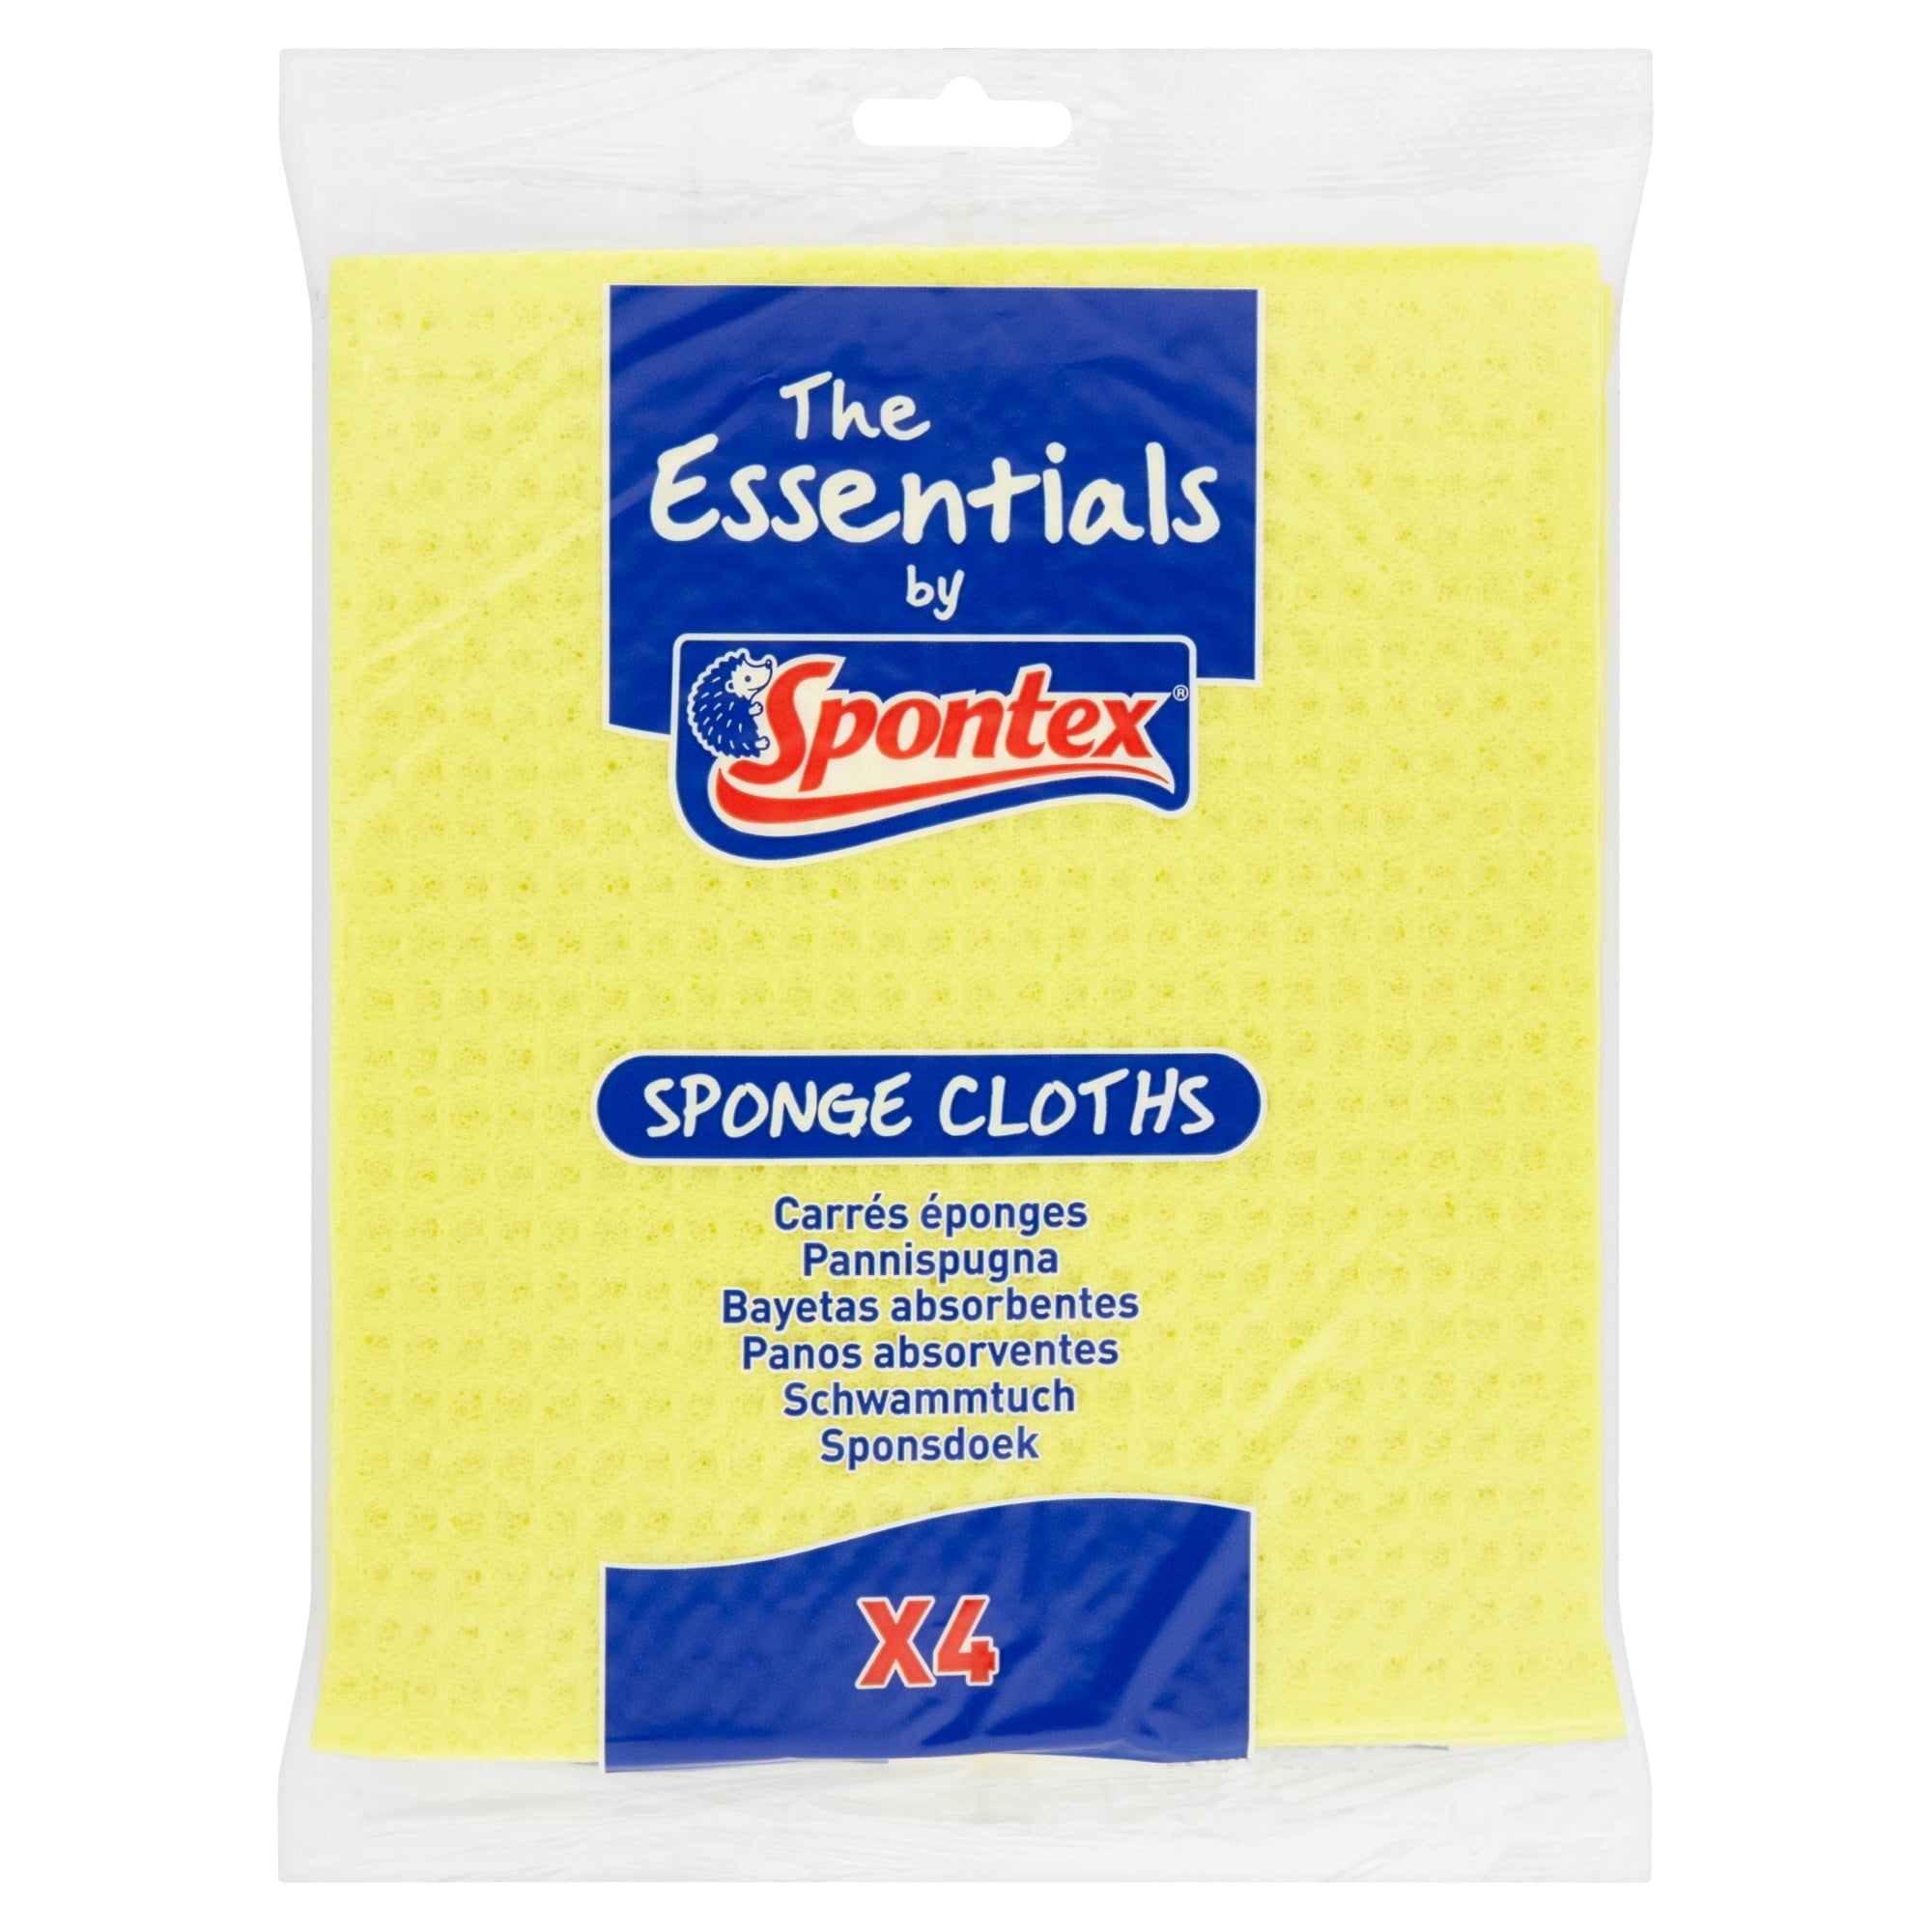 Spontex Essentials Yellow Sponge Cloths Pack of 4 - Premium Dusters / Cloths from Spontex - Just $1.45! Shop now at W Hurst & Son (IW) Ltd